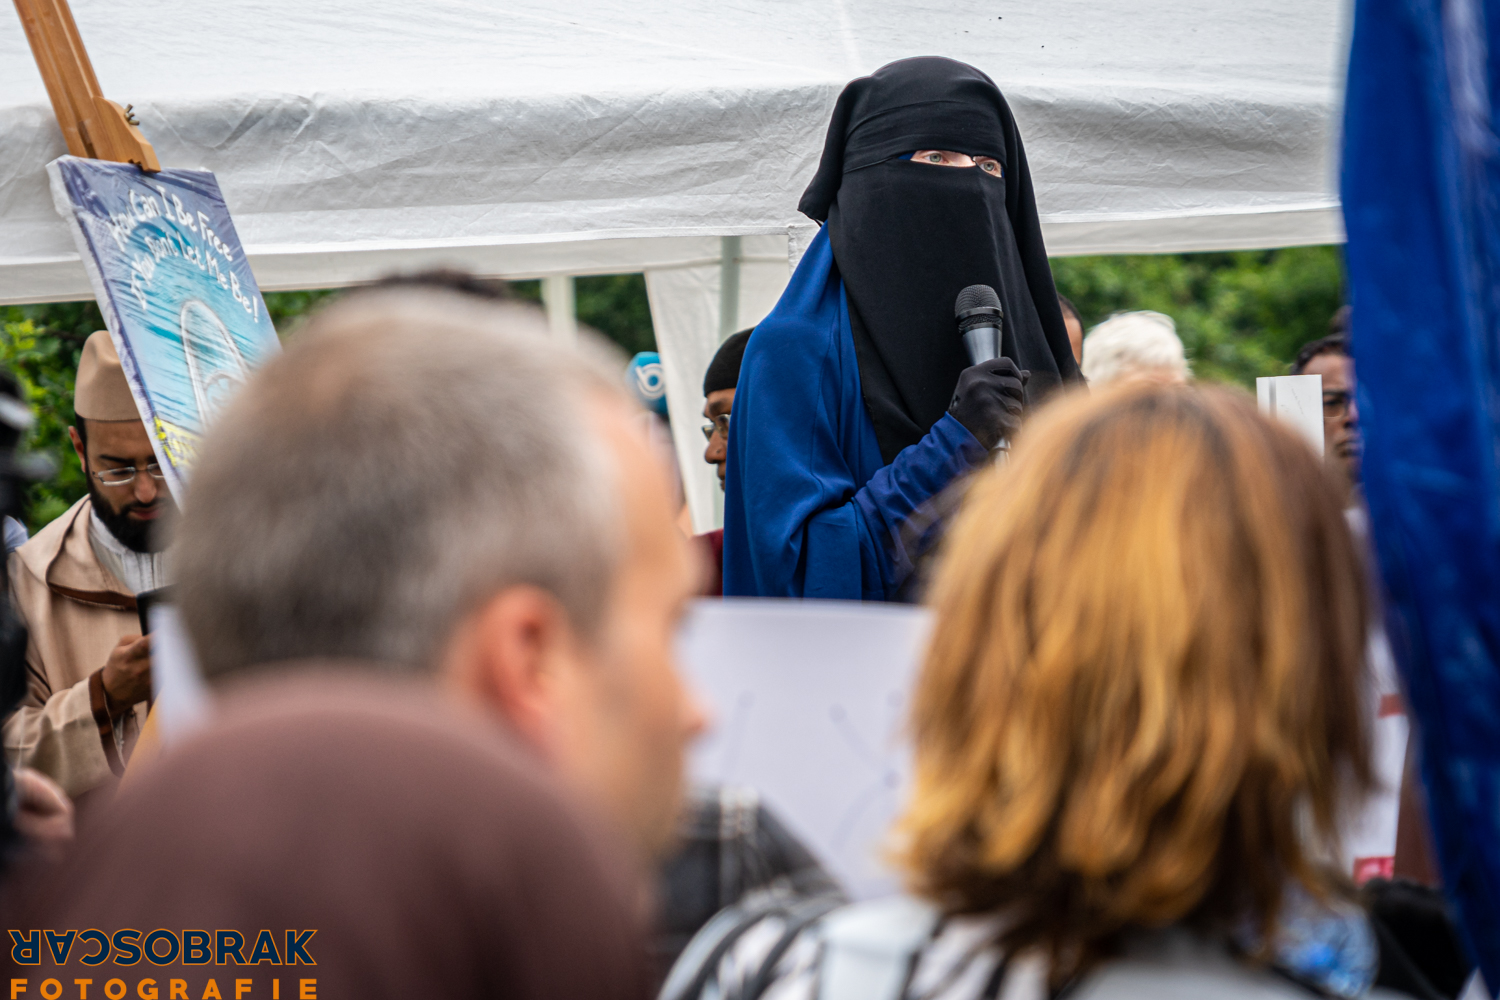 hand in hand tegen niqab verbod boerka den haag oscar brak fotografie